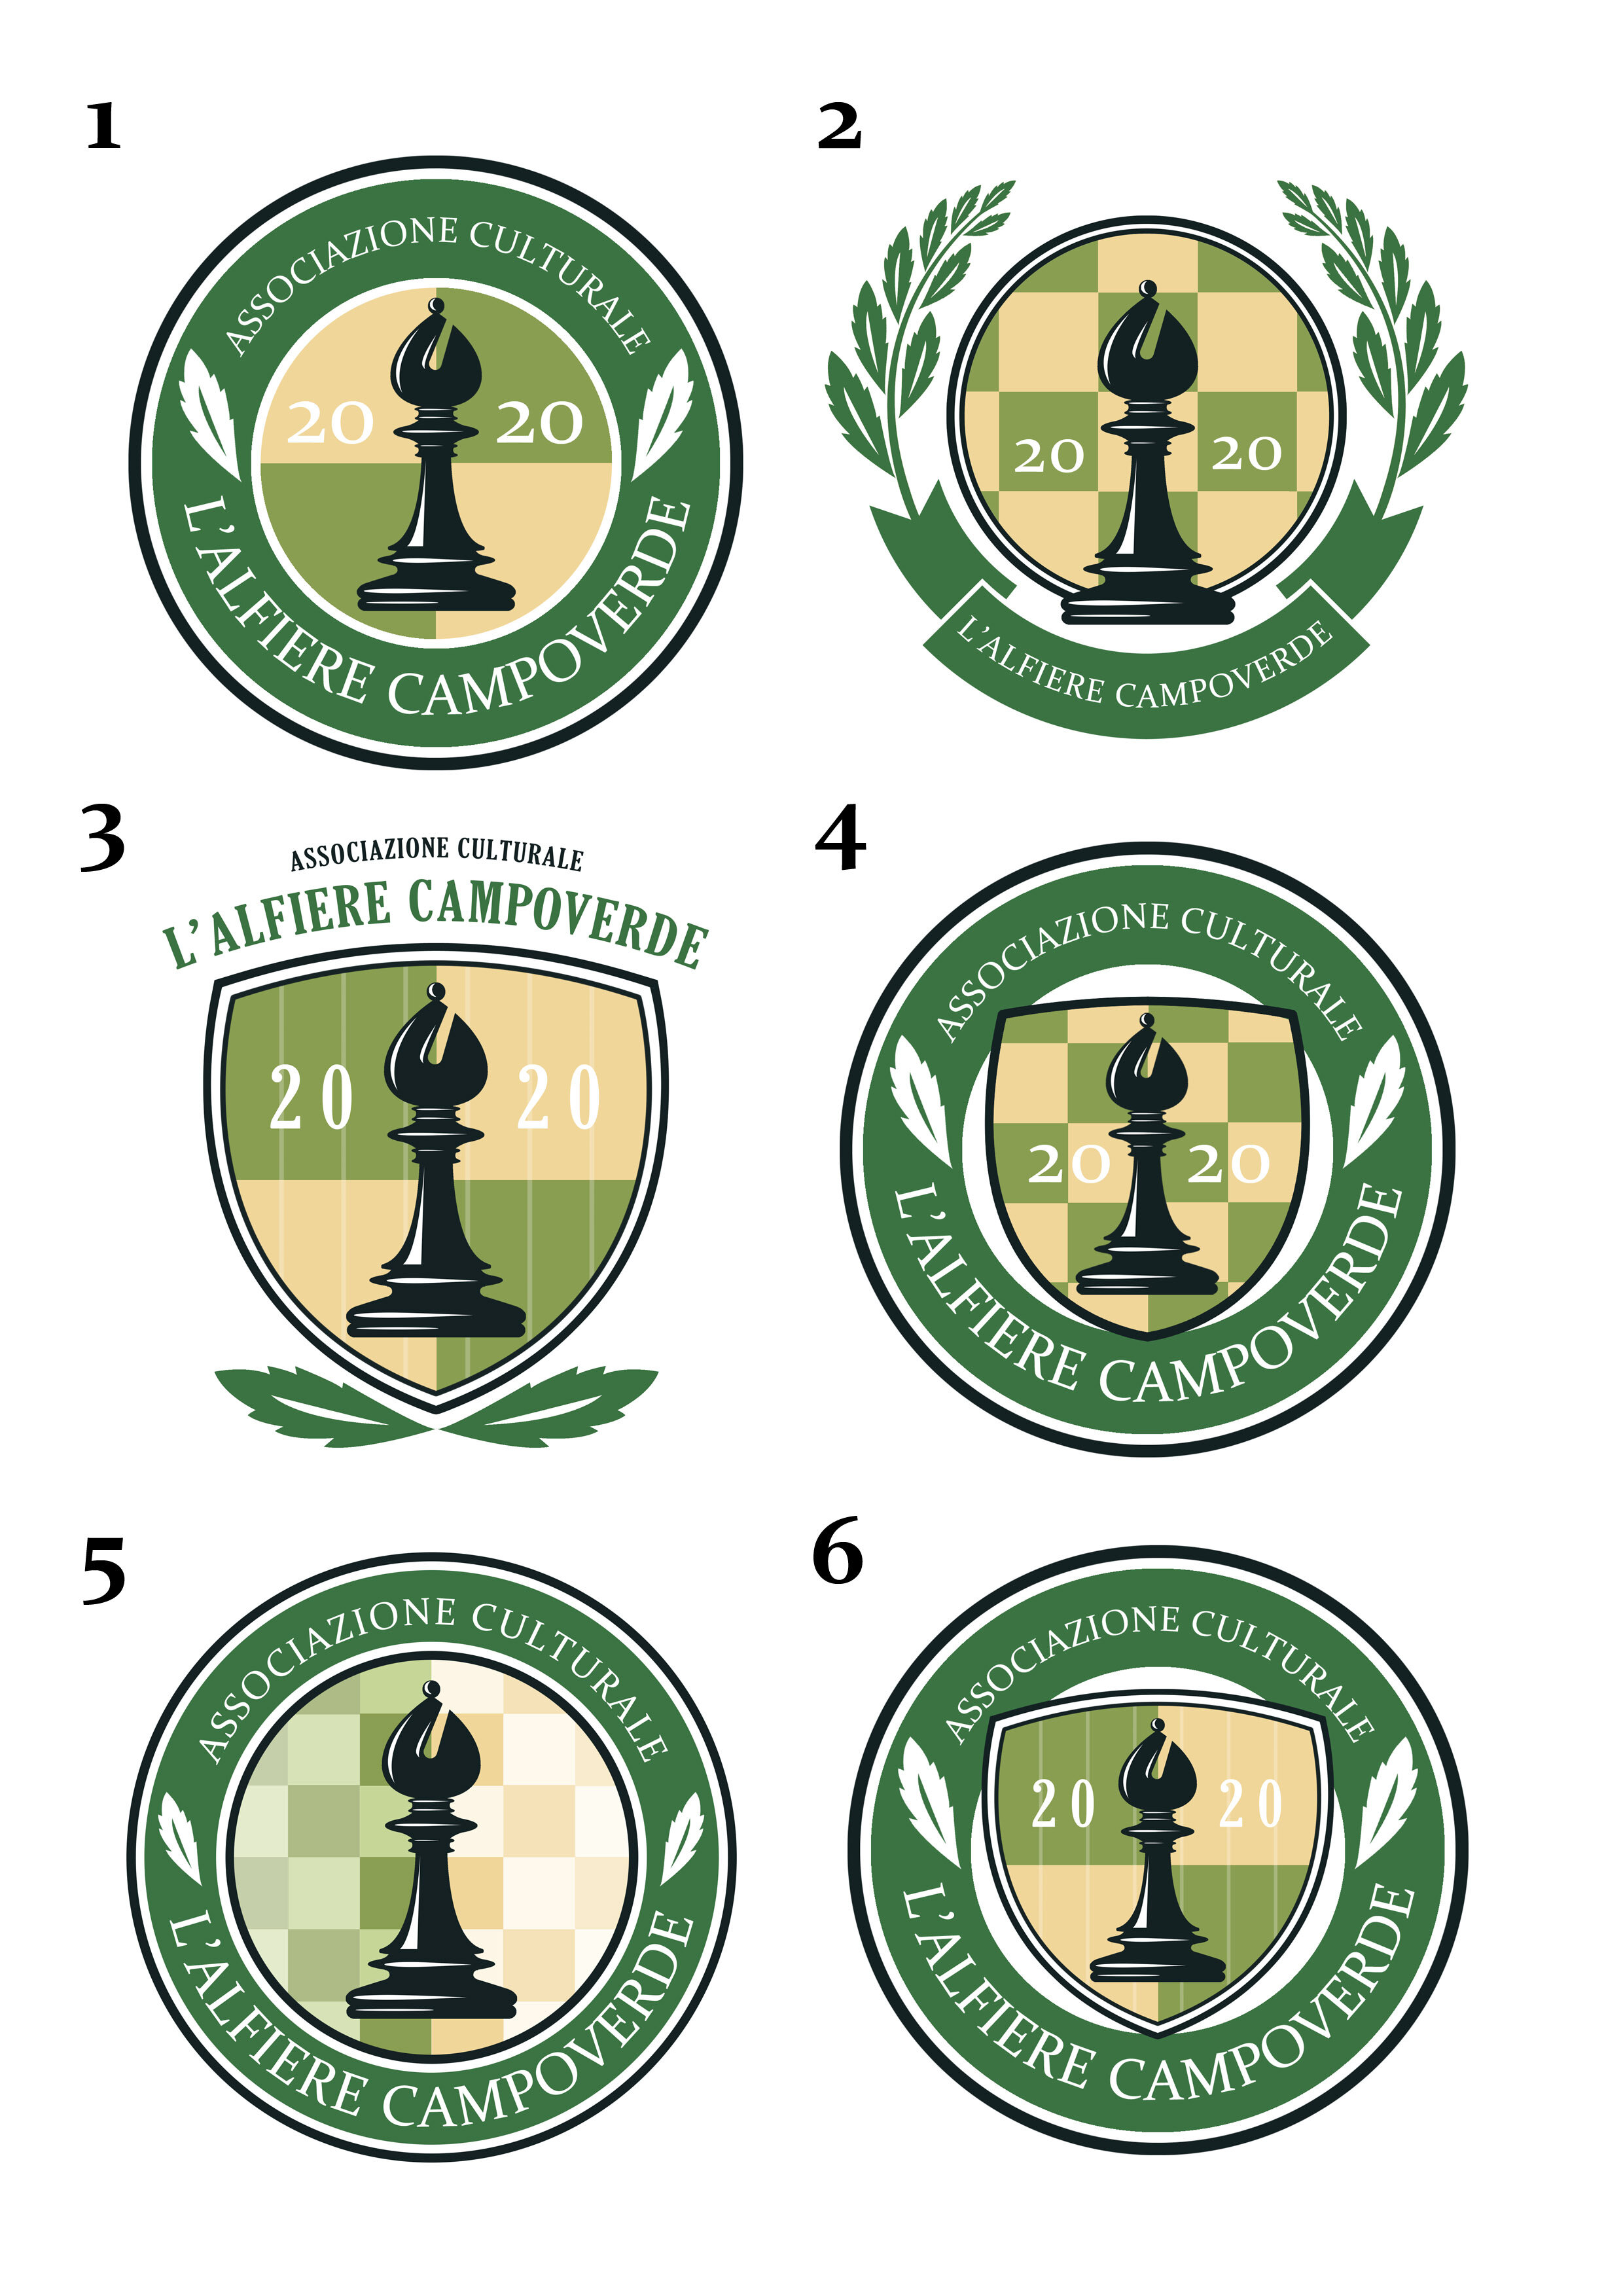 L'Alfiere Campoverde logos